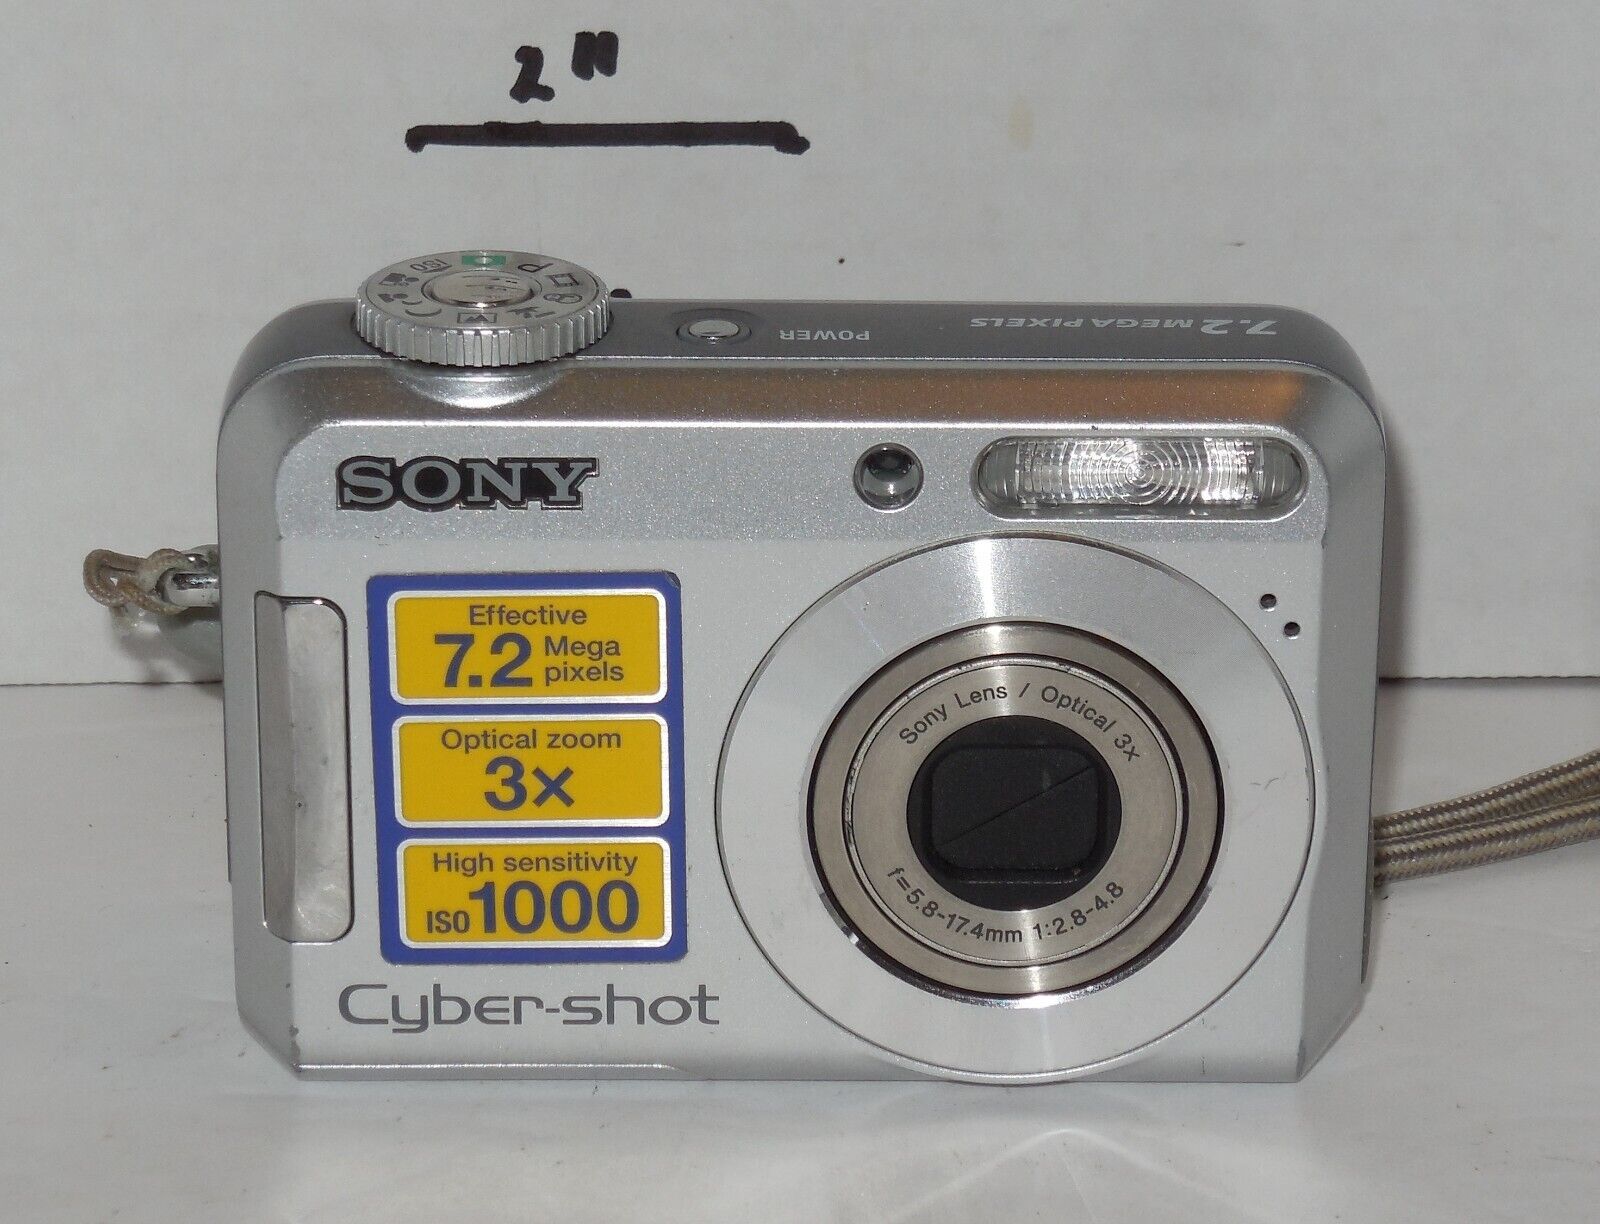 Sony Cyber-shot DSC-S650 7.2MP Digital Camera - Silver Tested Works - $74.25